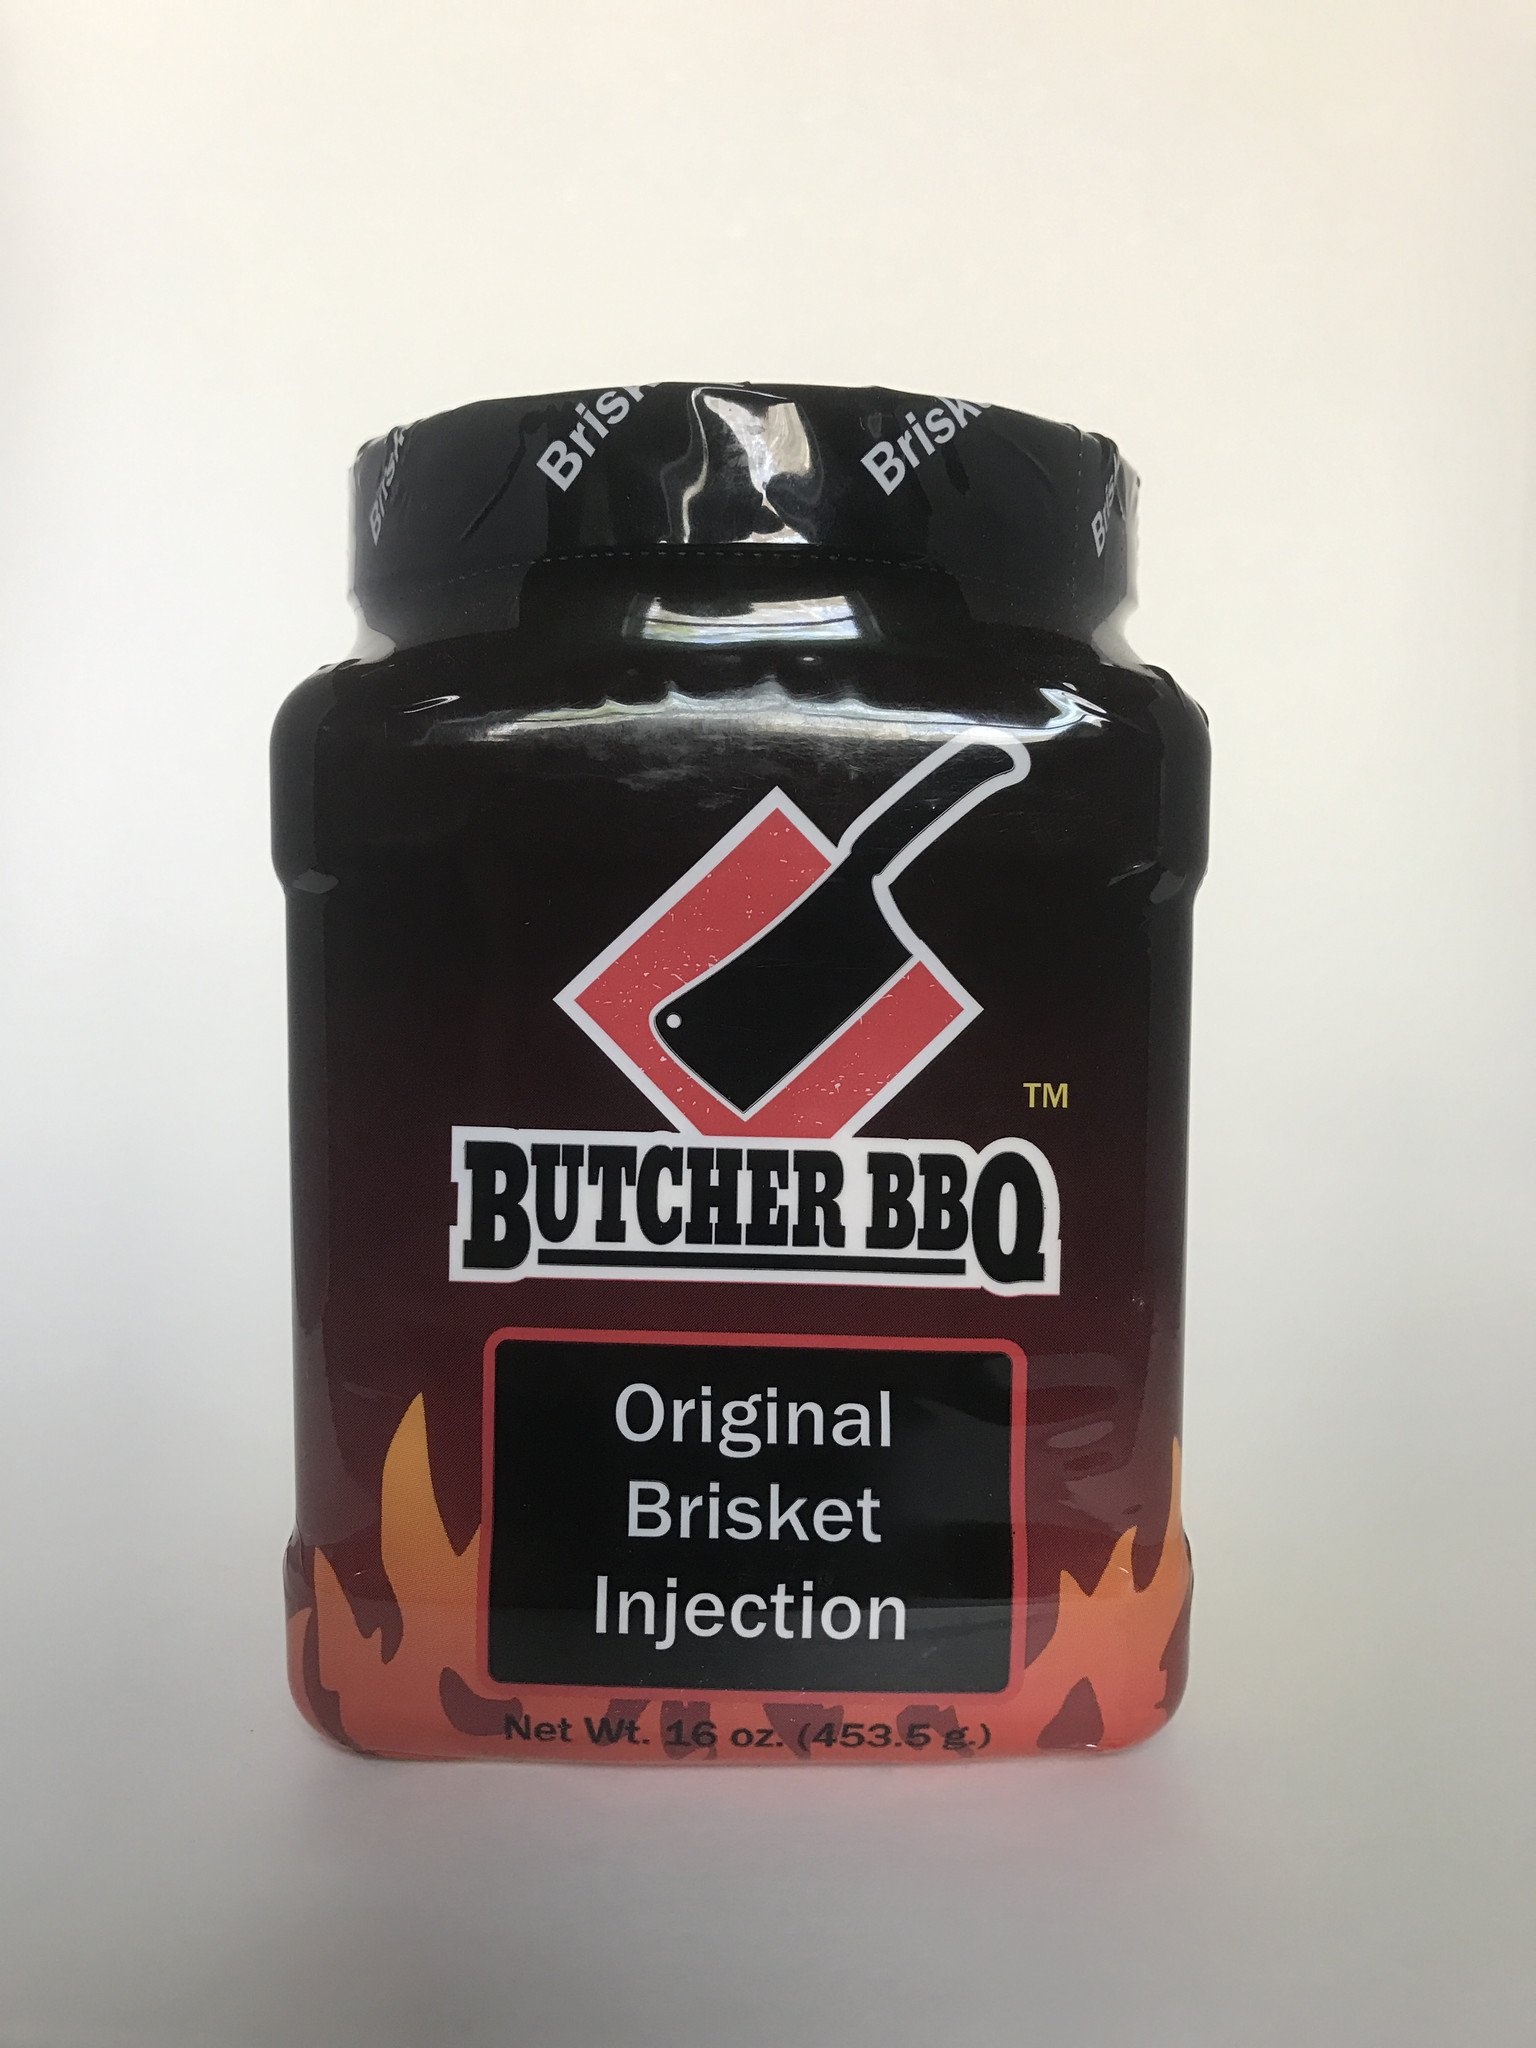 Butcher BBQ: Original Brisket Injection